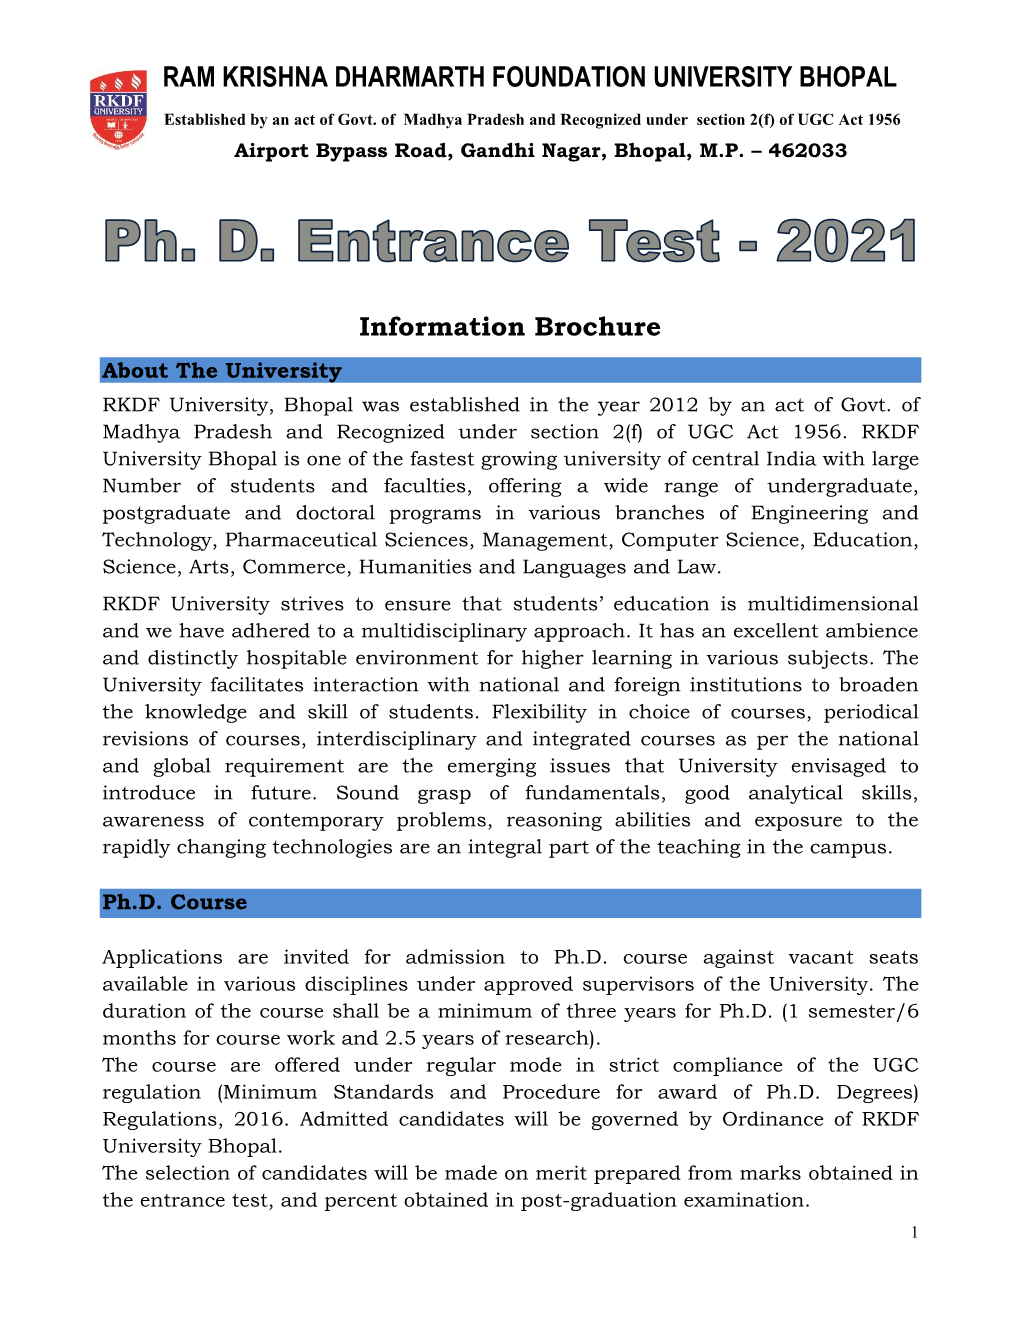 Phd Information Brochure